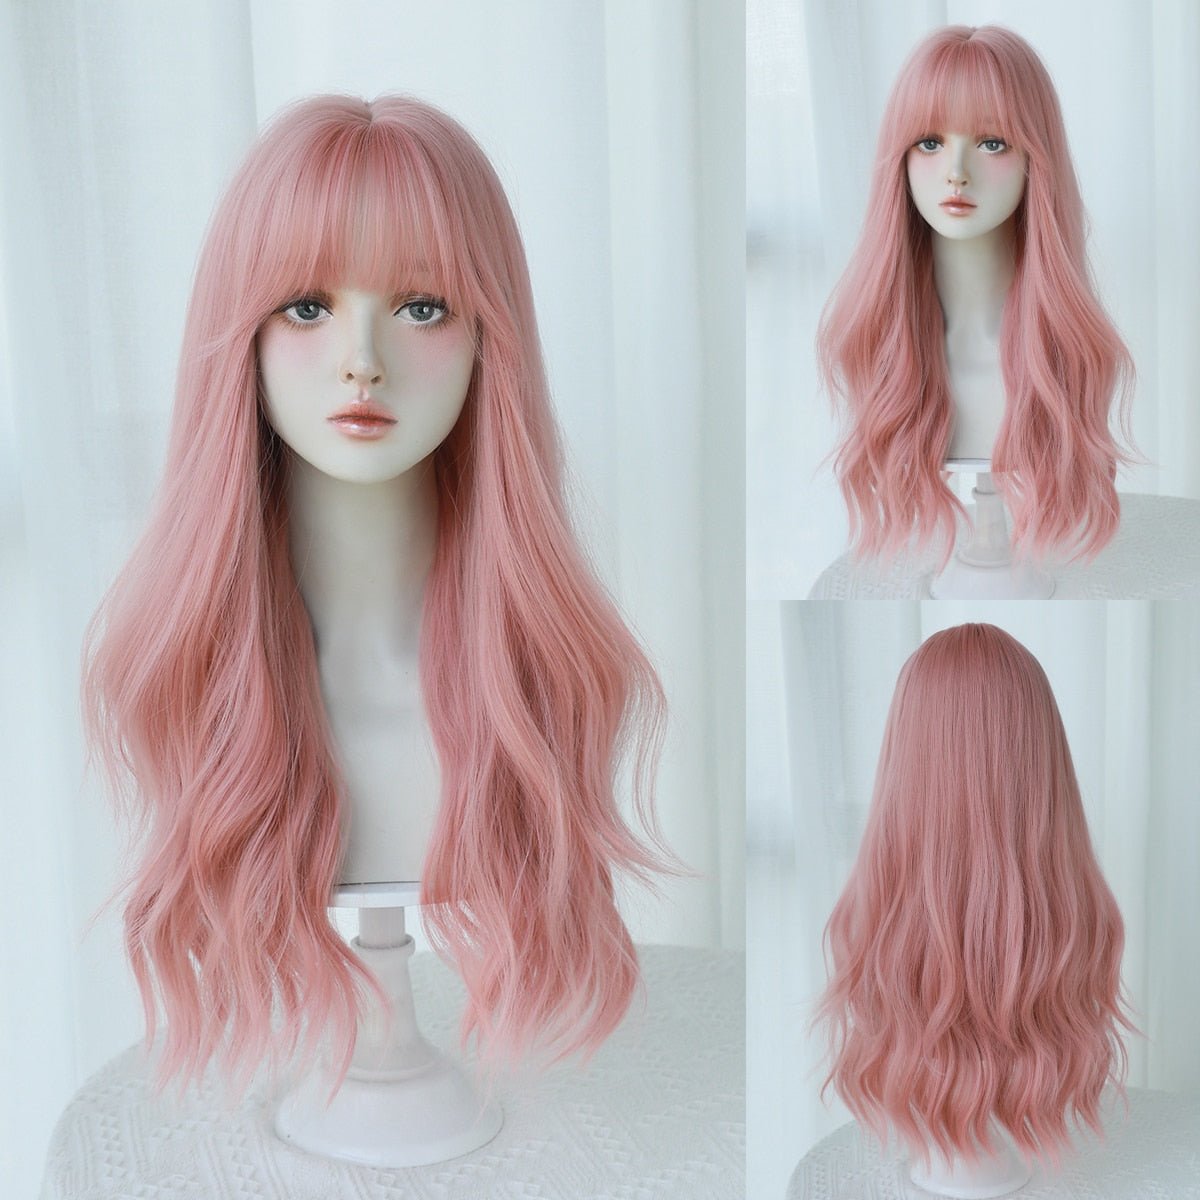 Pinky Long Wavy Wig with Bangs - HairNjoy